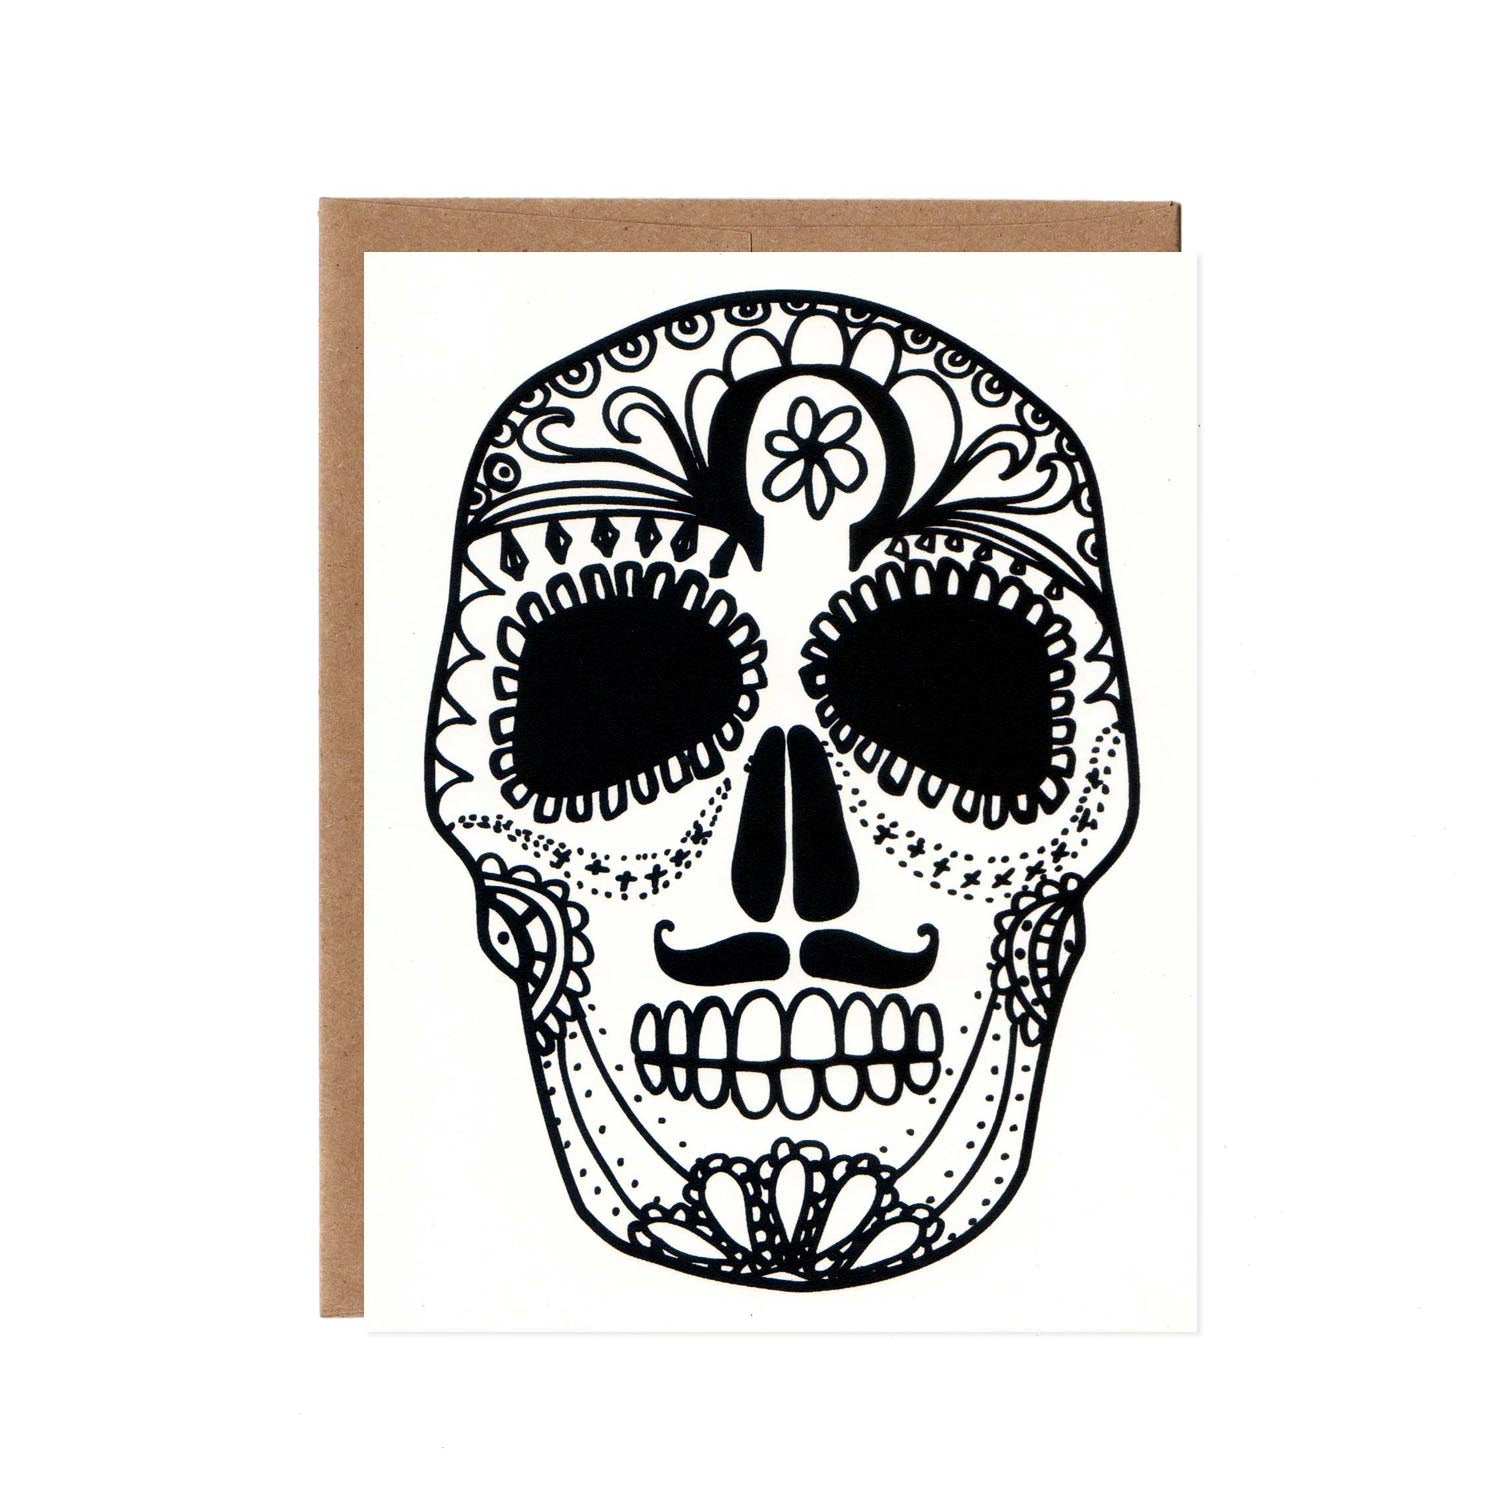 Black sugar skull Image on a white greeting card